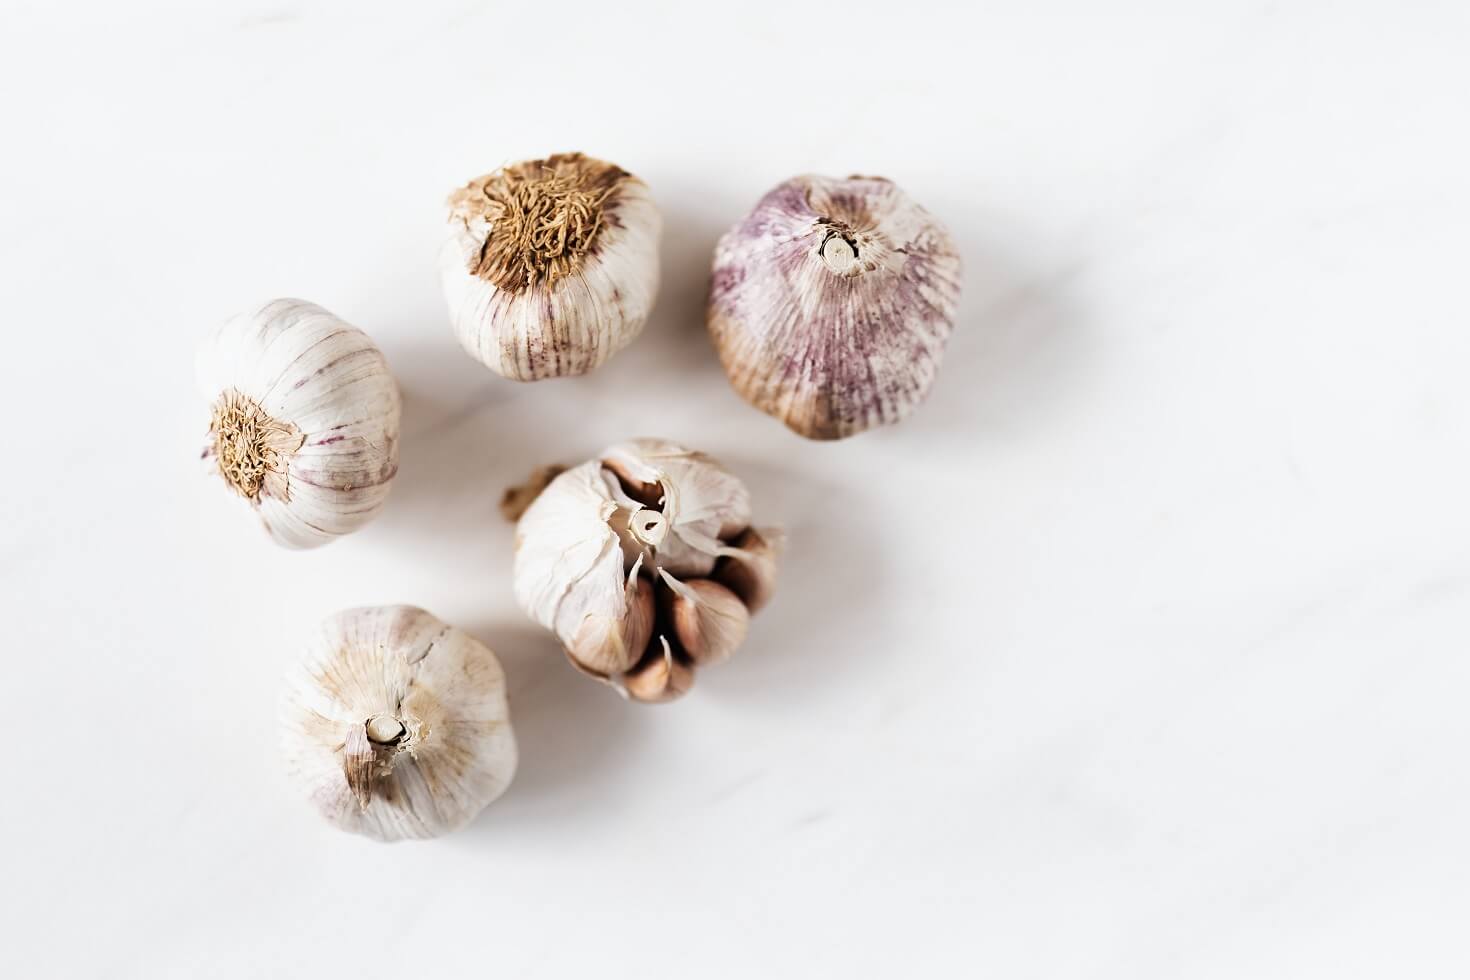 Cloves of prebiotic-rich garlic on the countertop